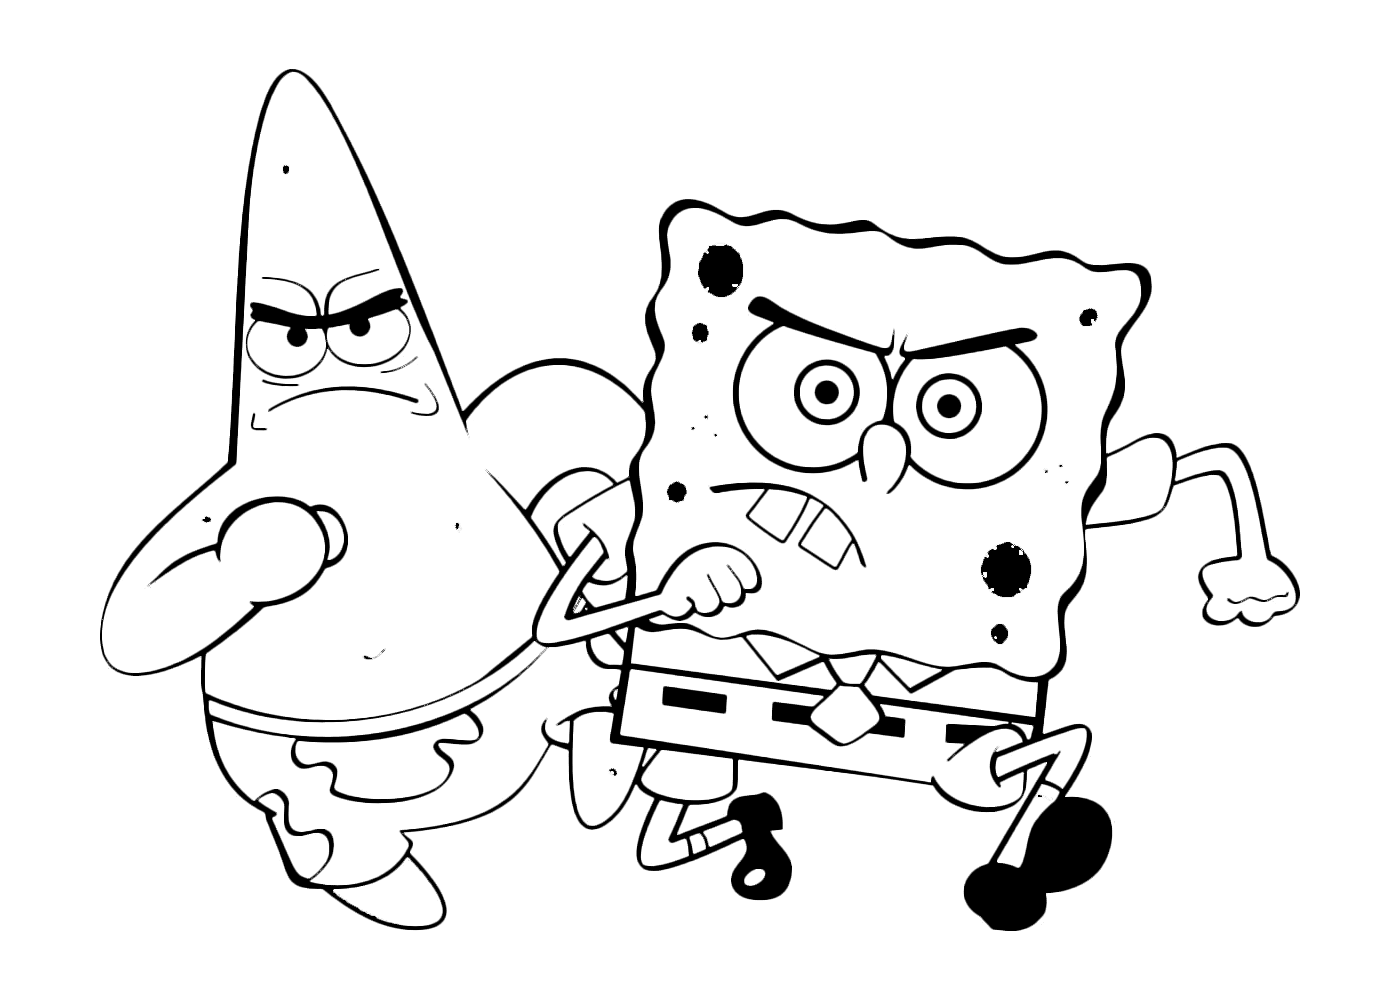 SpongeBob - SpongeBob and Patrick Star advancing very angry